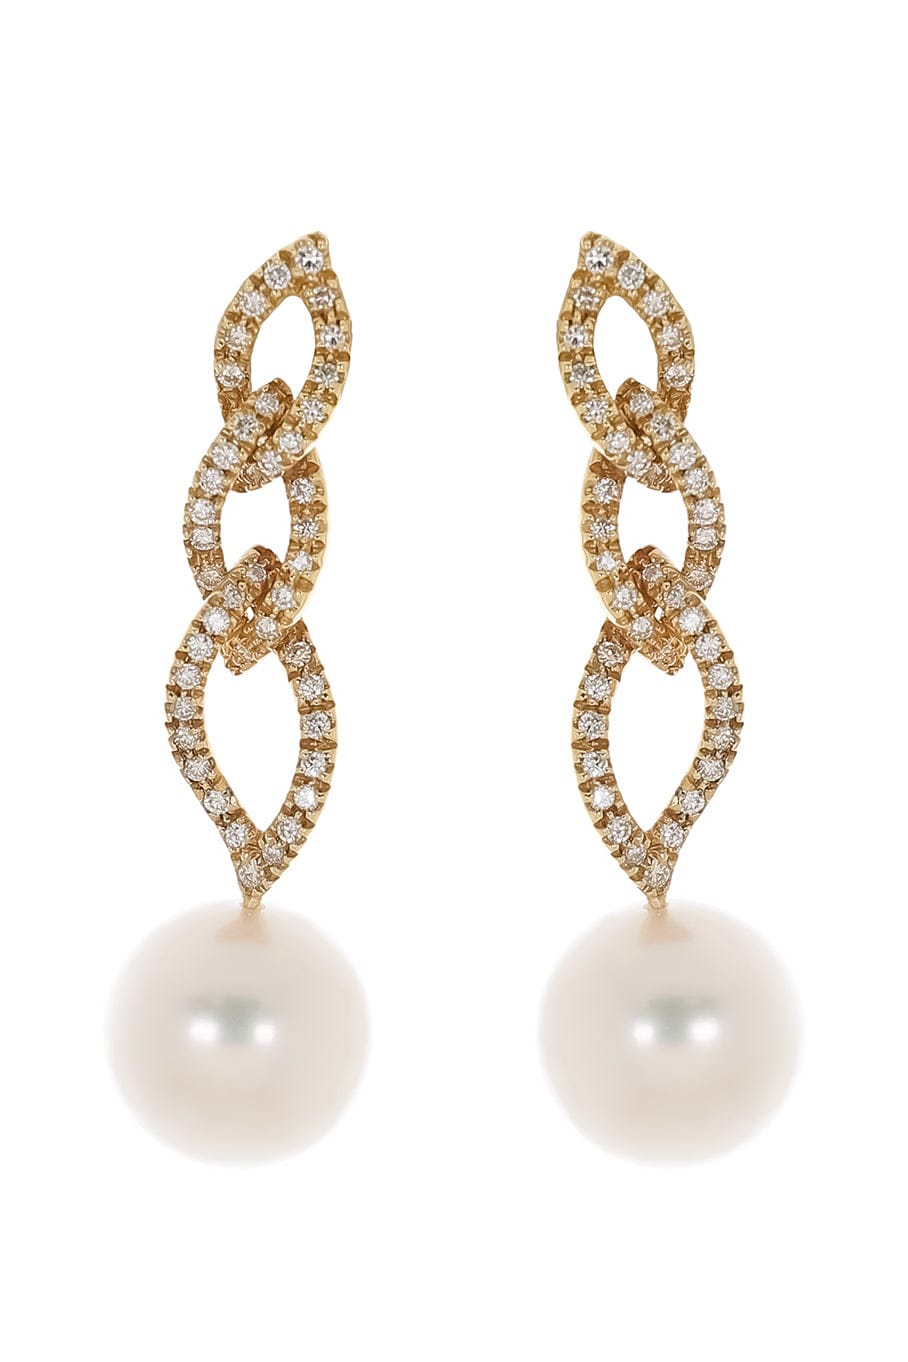 BAGGINS-White South Sea Pearl Twist Earrings-YELLOW GOLD